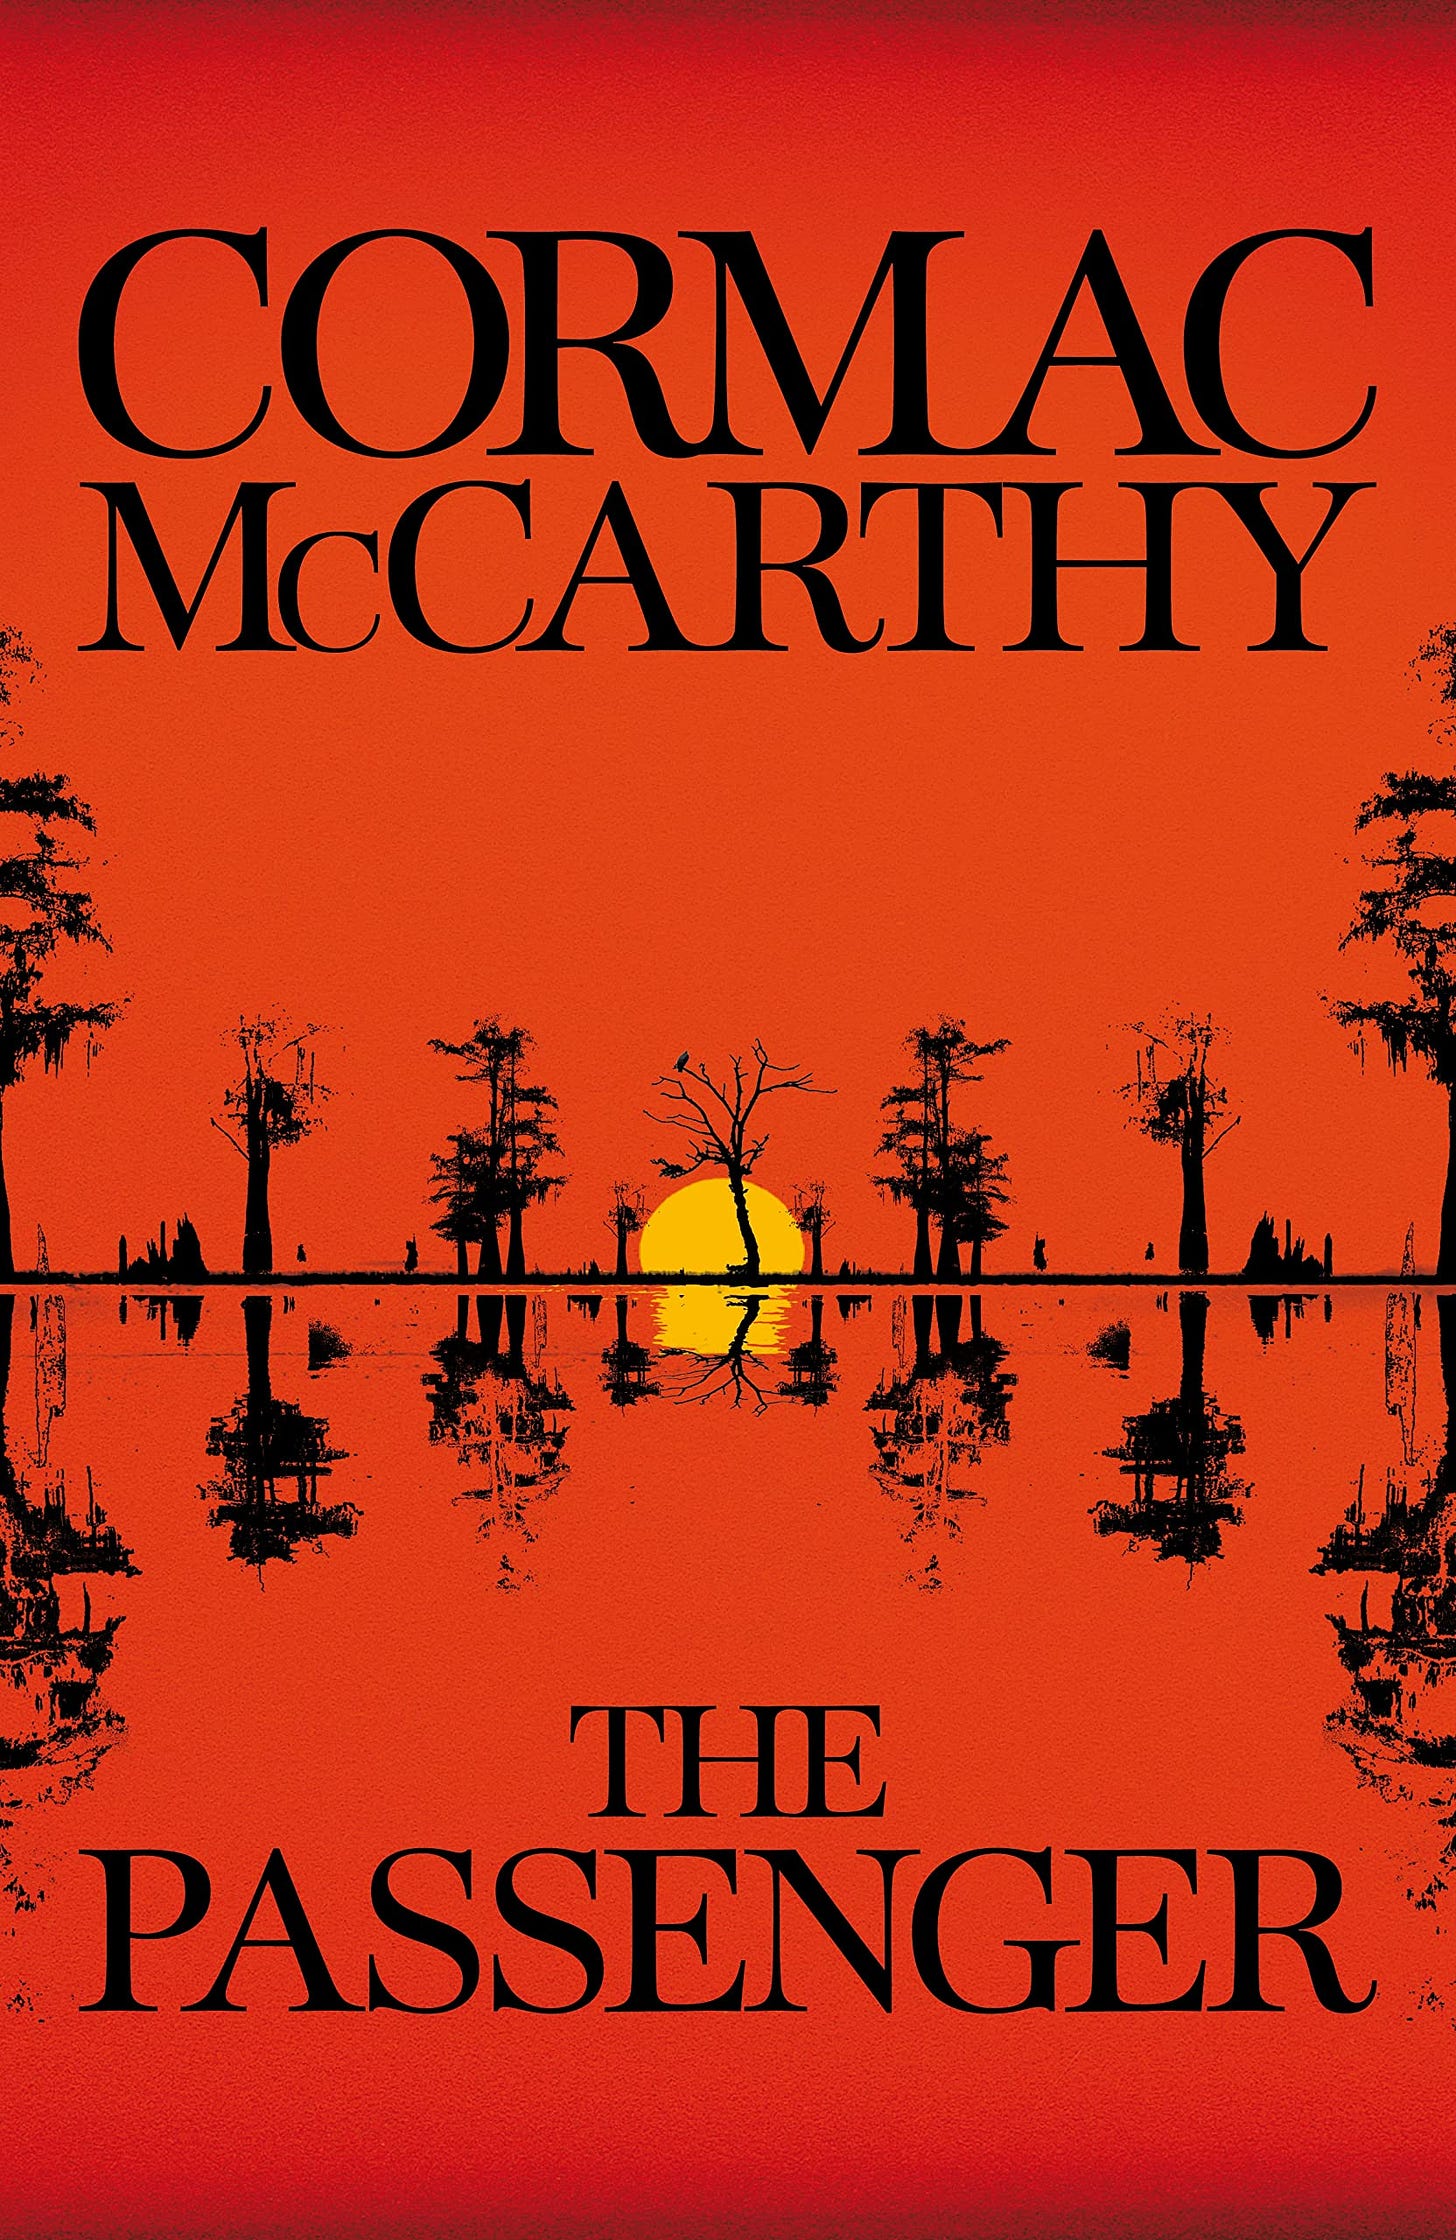 The Passenger: Cormac McCarthy : McCarthy, Cormac: Amazon.de: Bücher